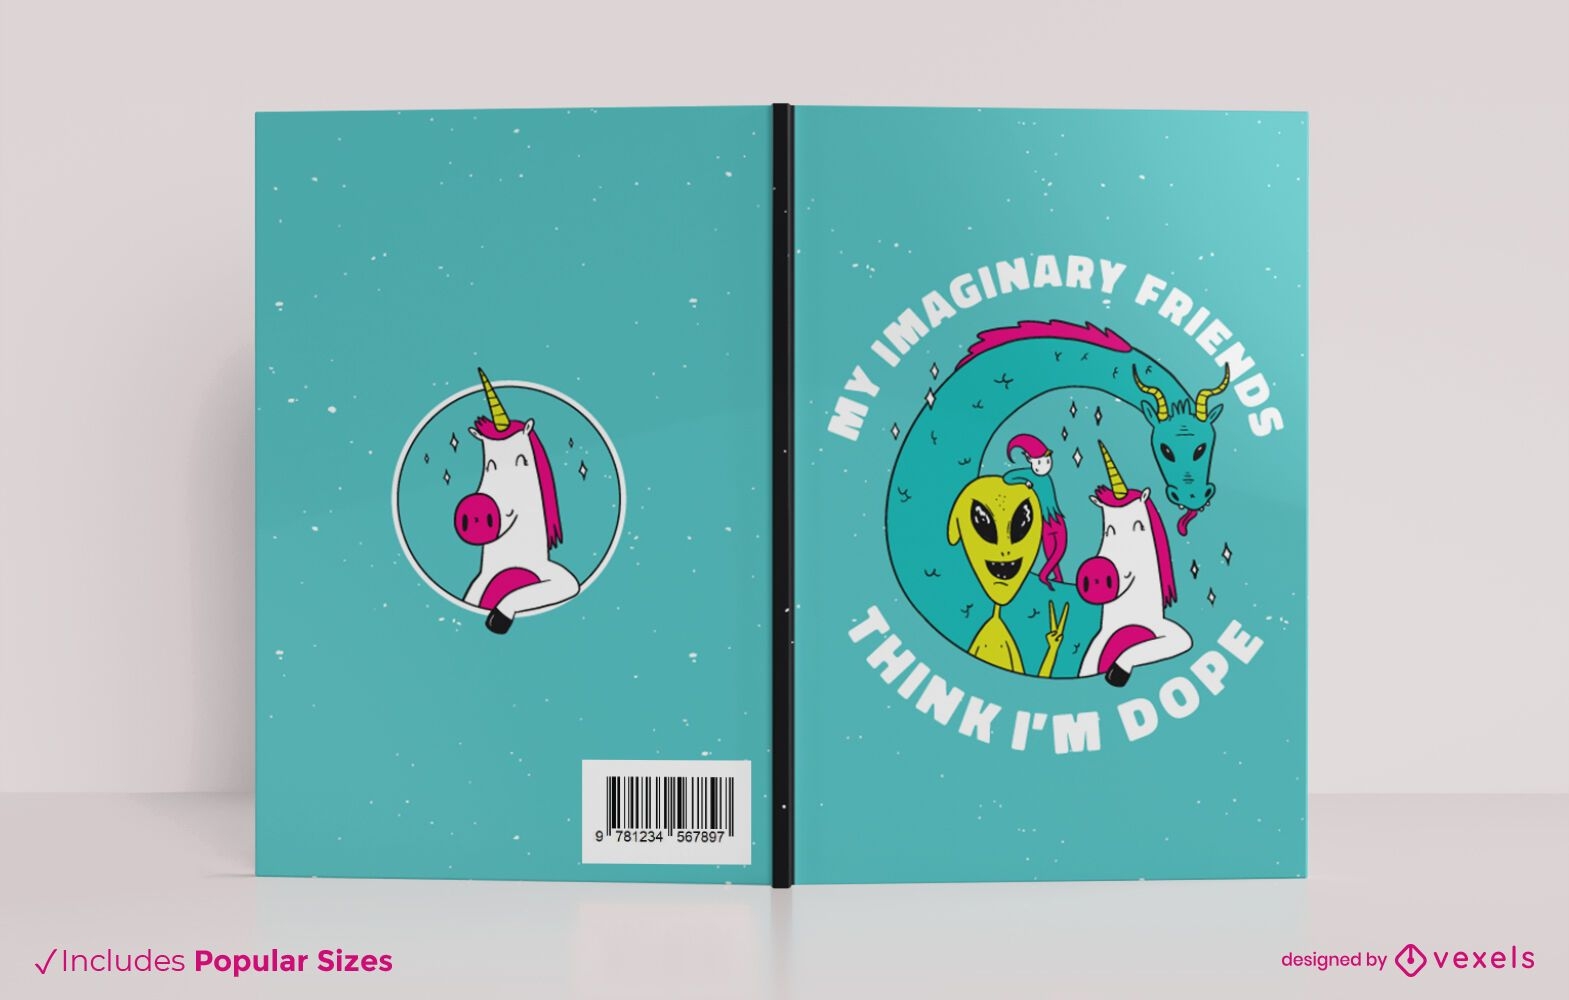 Imaginary friends book cover design